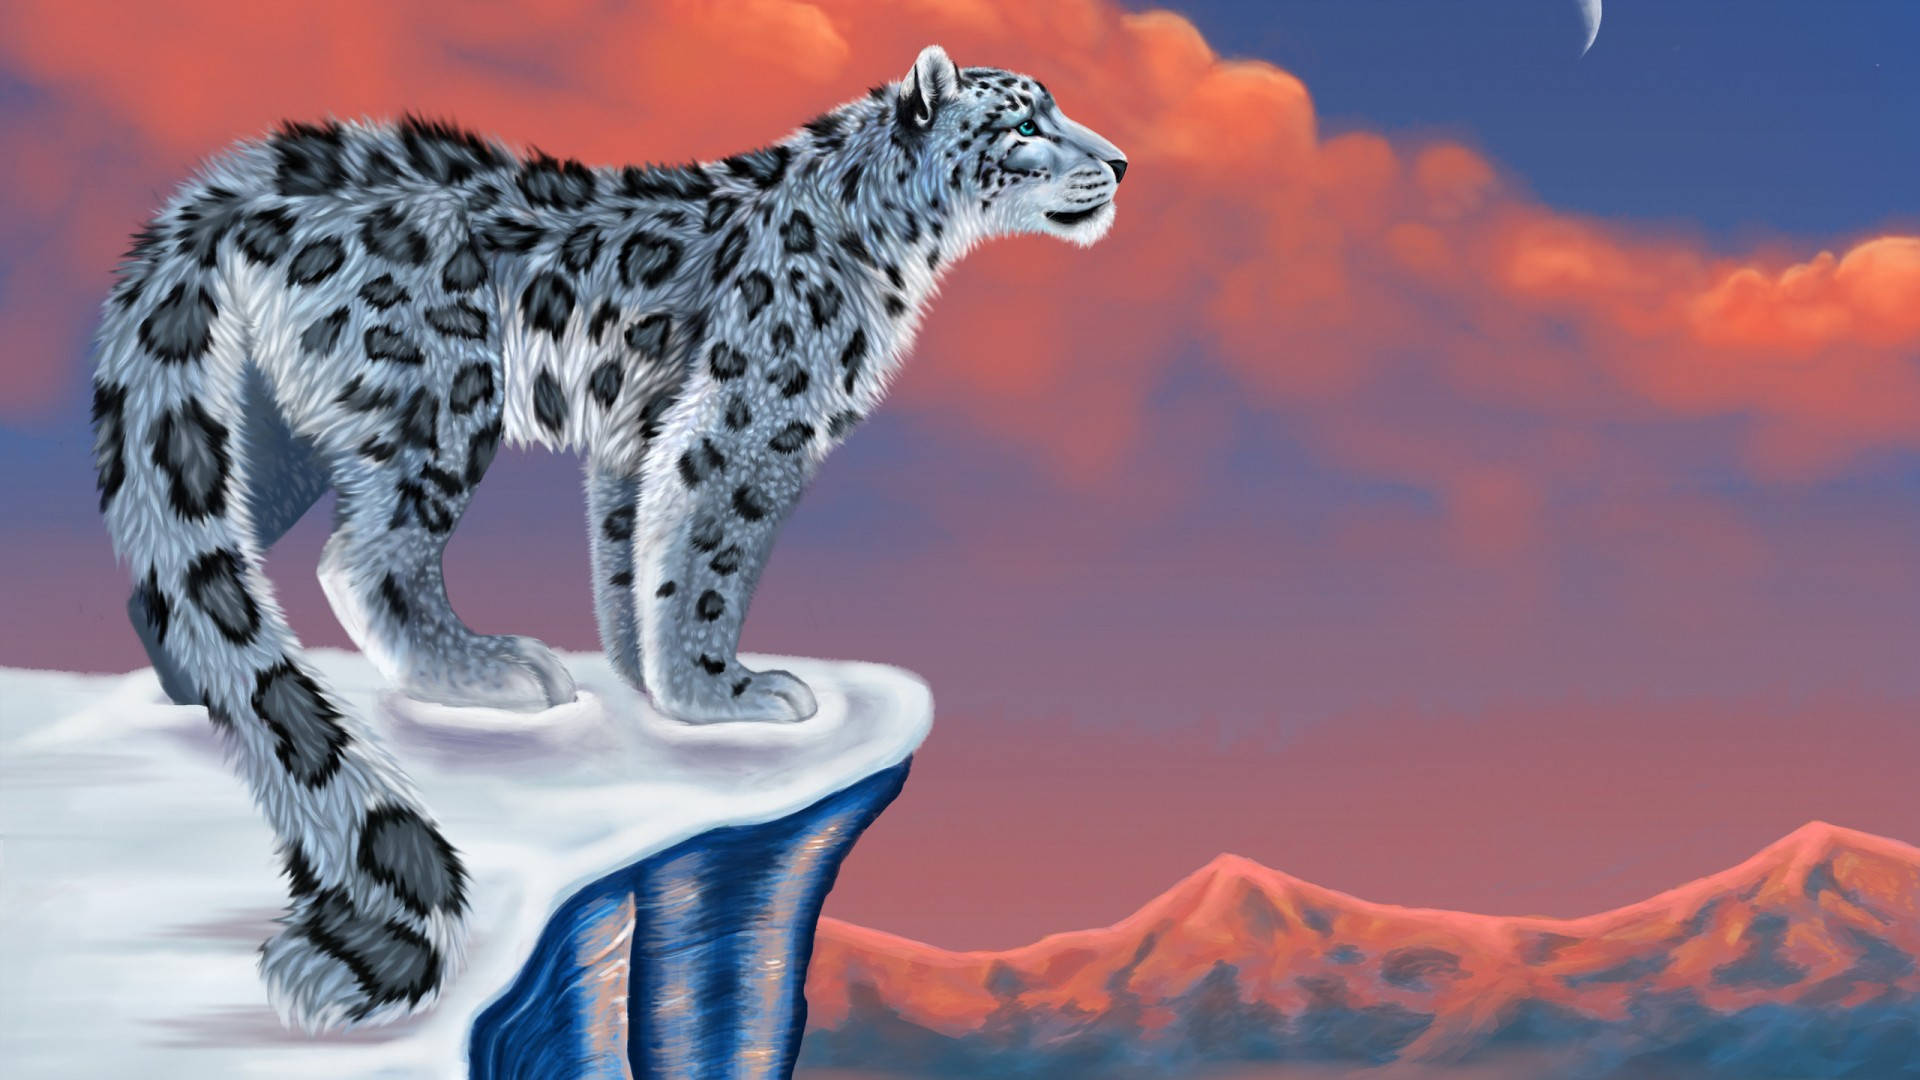 Snow Leopard Animal On Snowy Mountain Digital Art Background